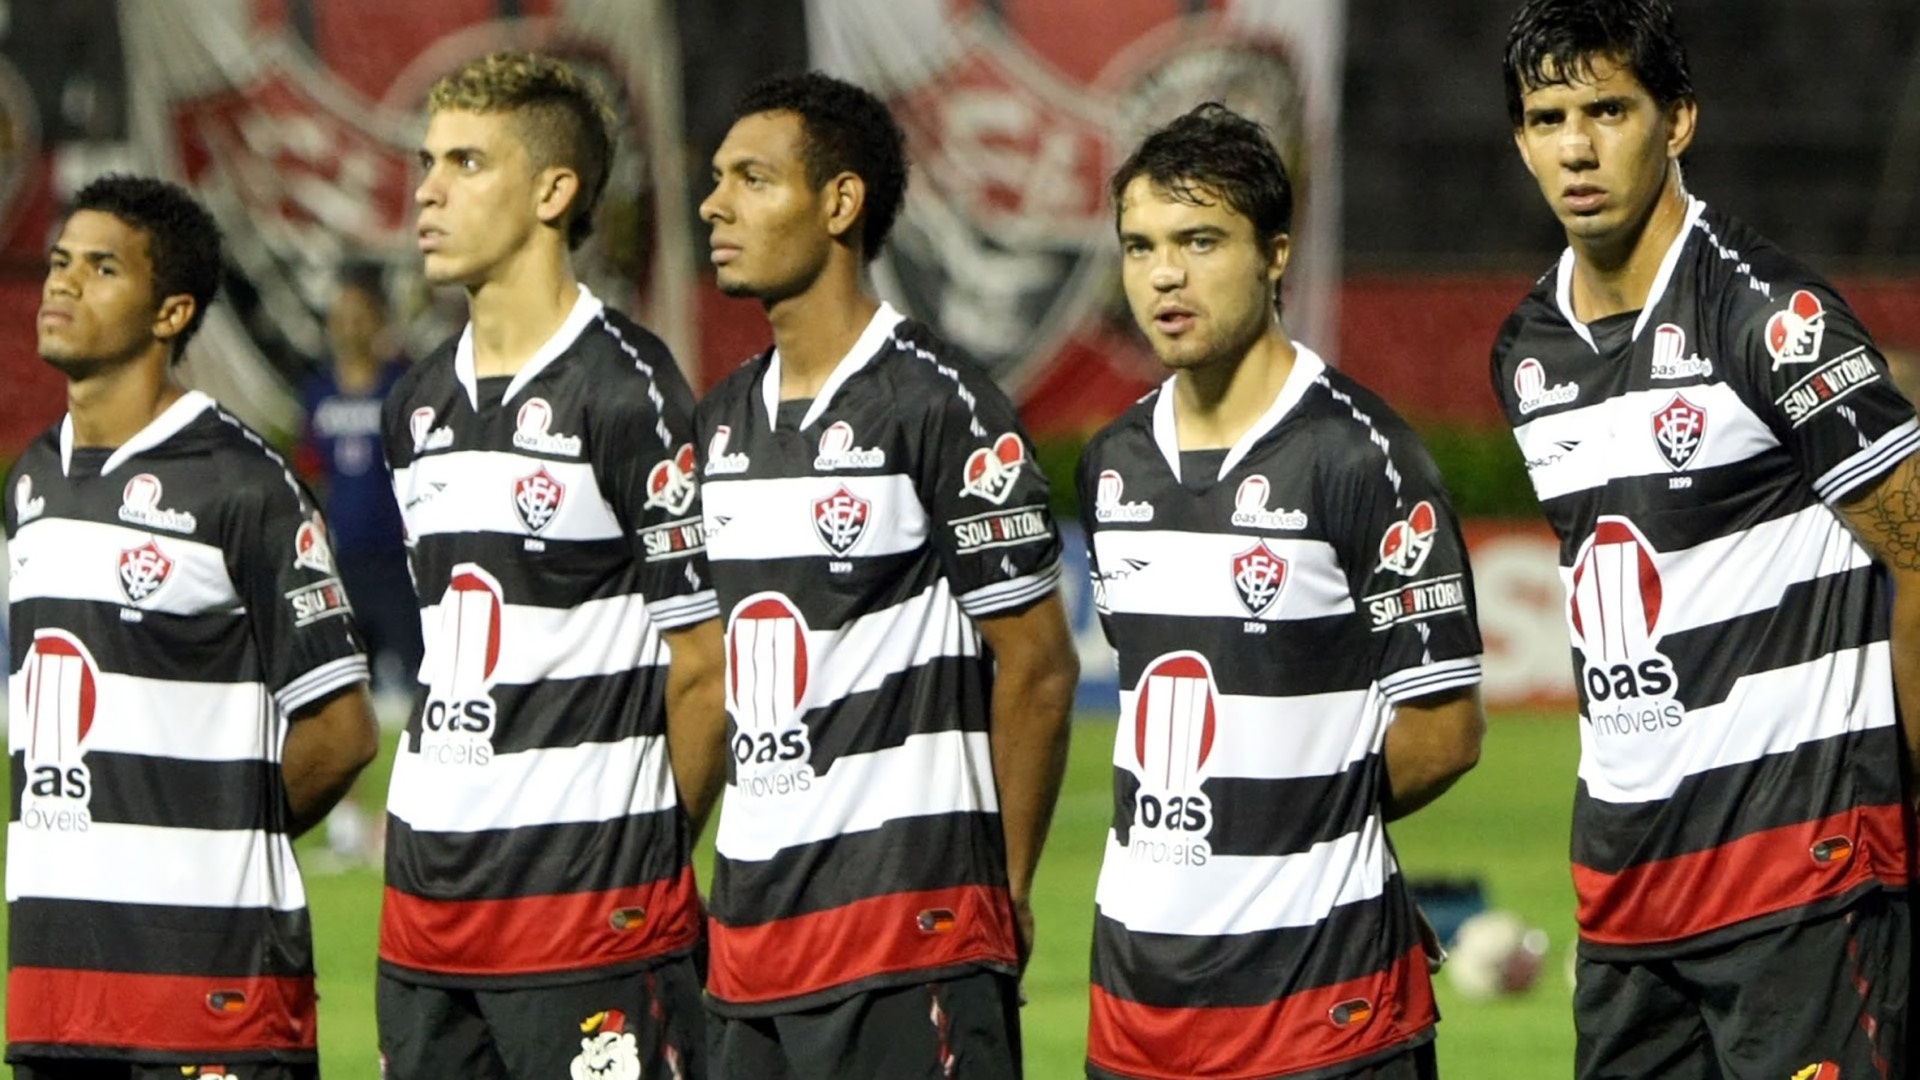 FutMKT: Levantando Bandeiras - 6 clubes brasileiros que mandam bom no Marketing 3.0. Goal